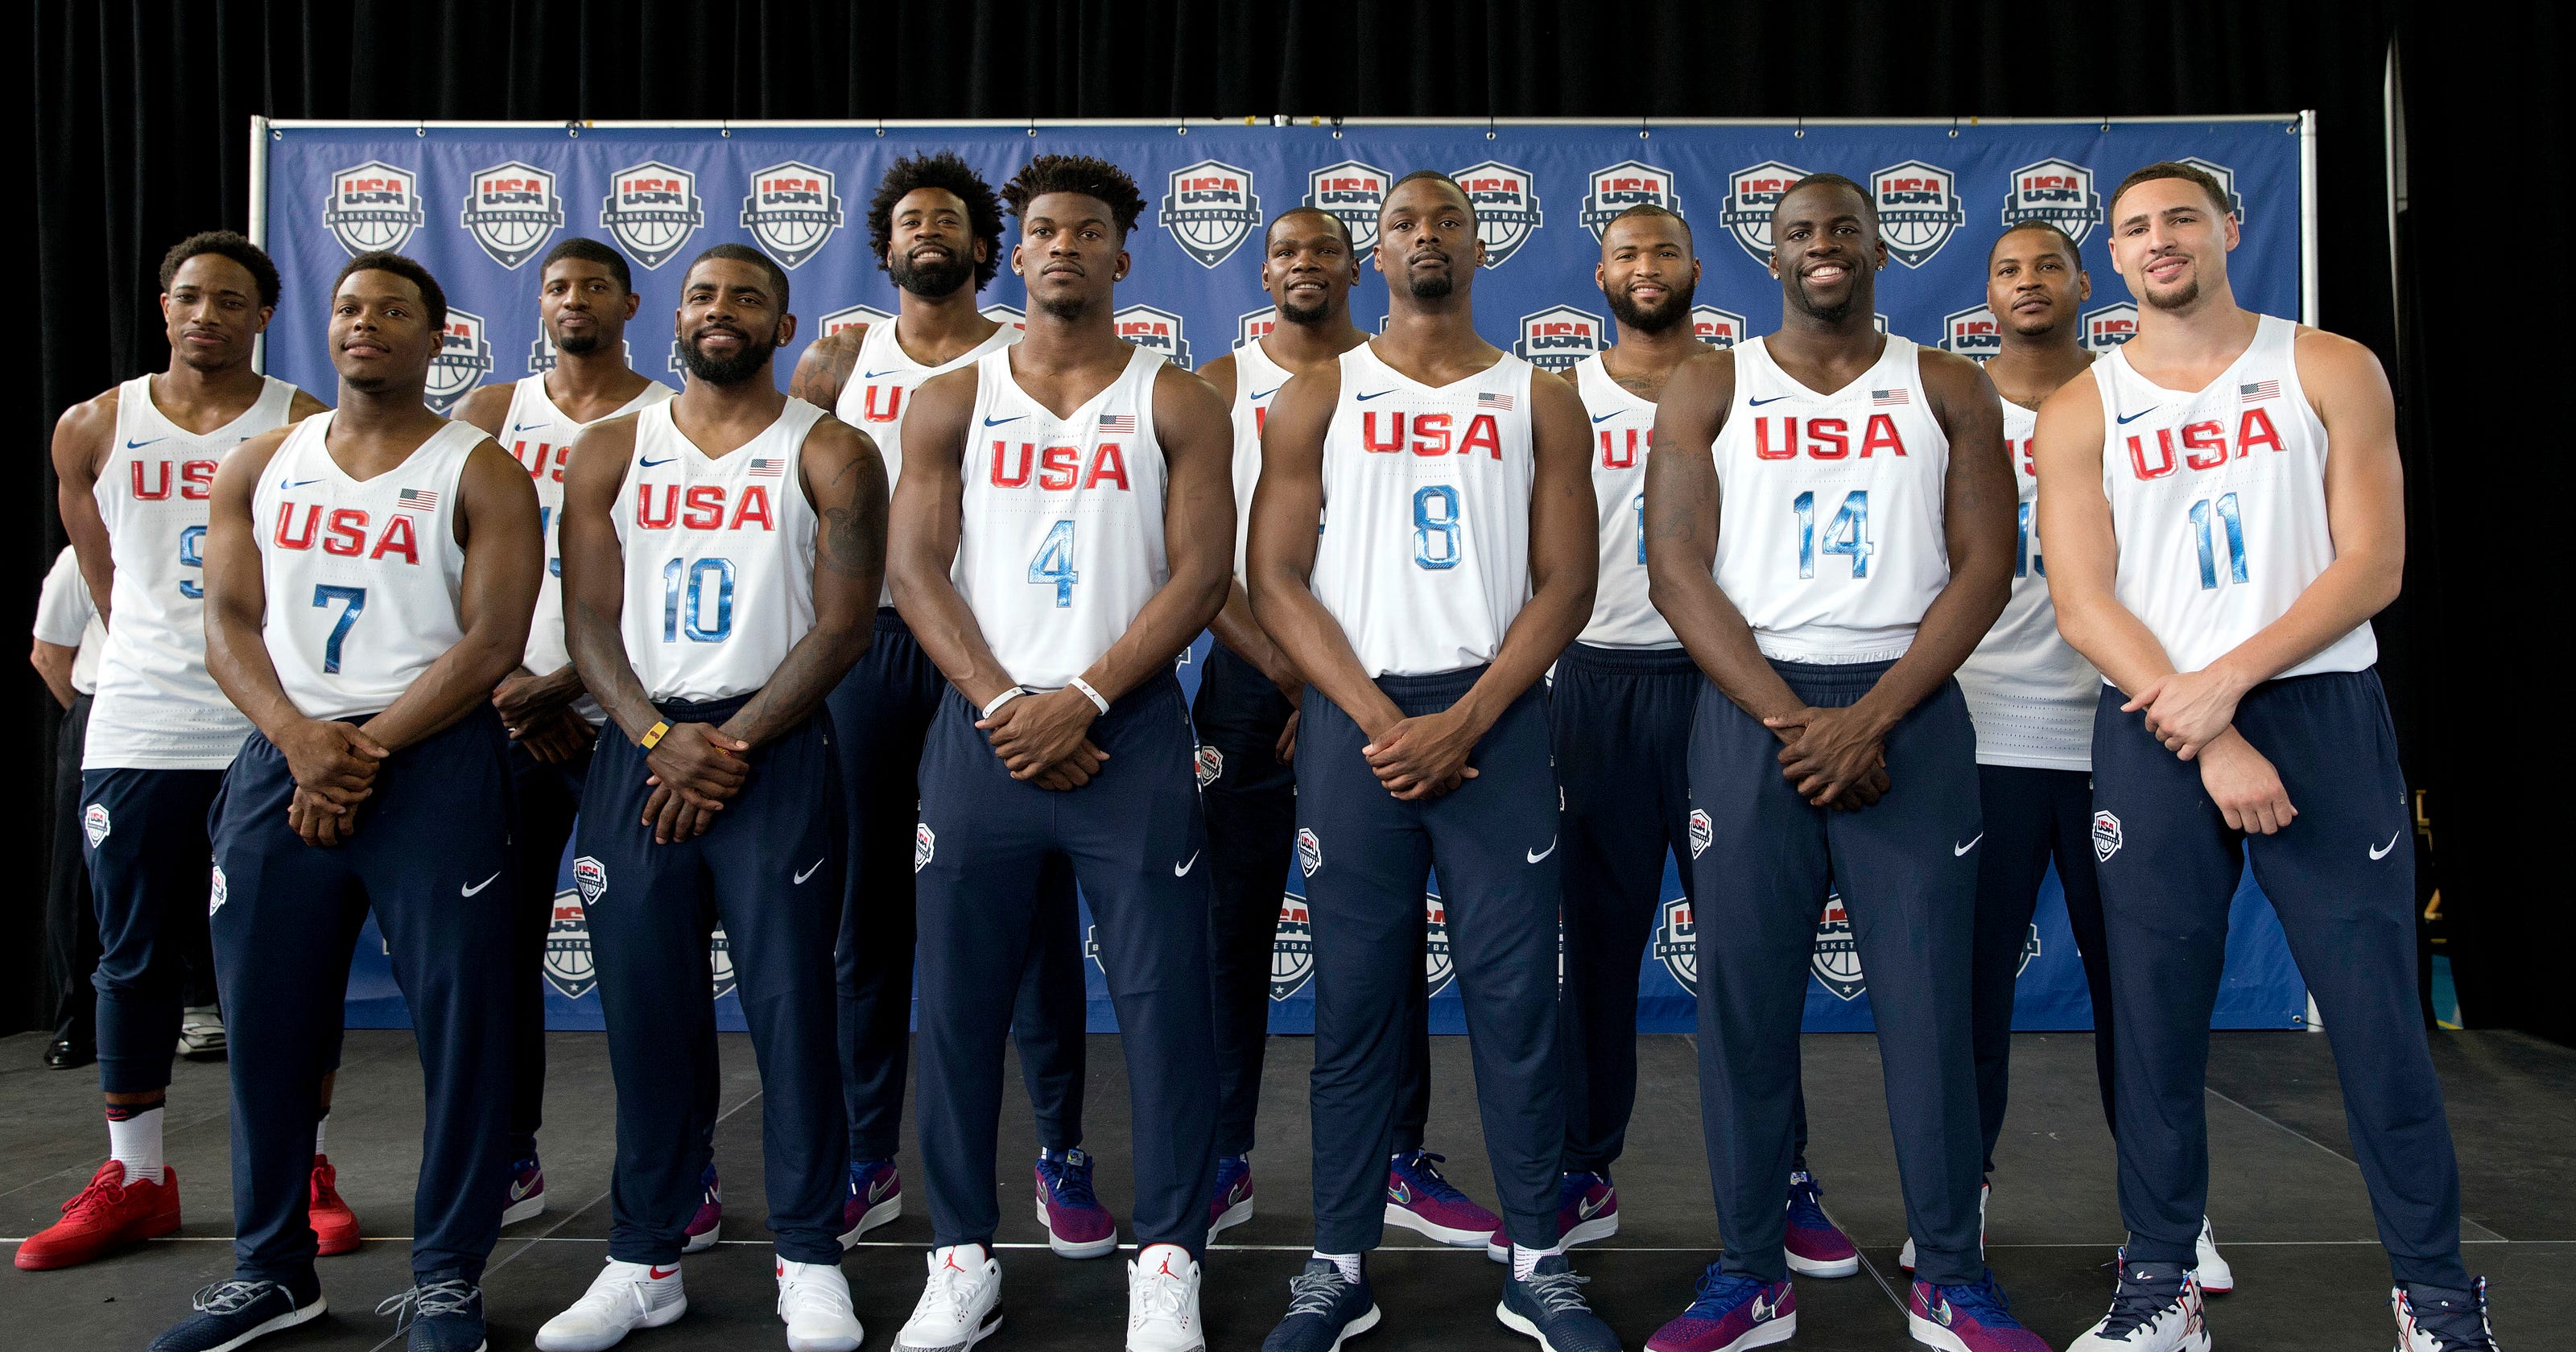 USA Basketball is still Olympics best team